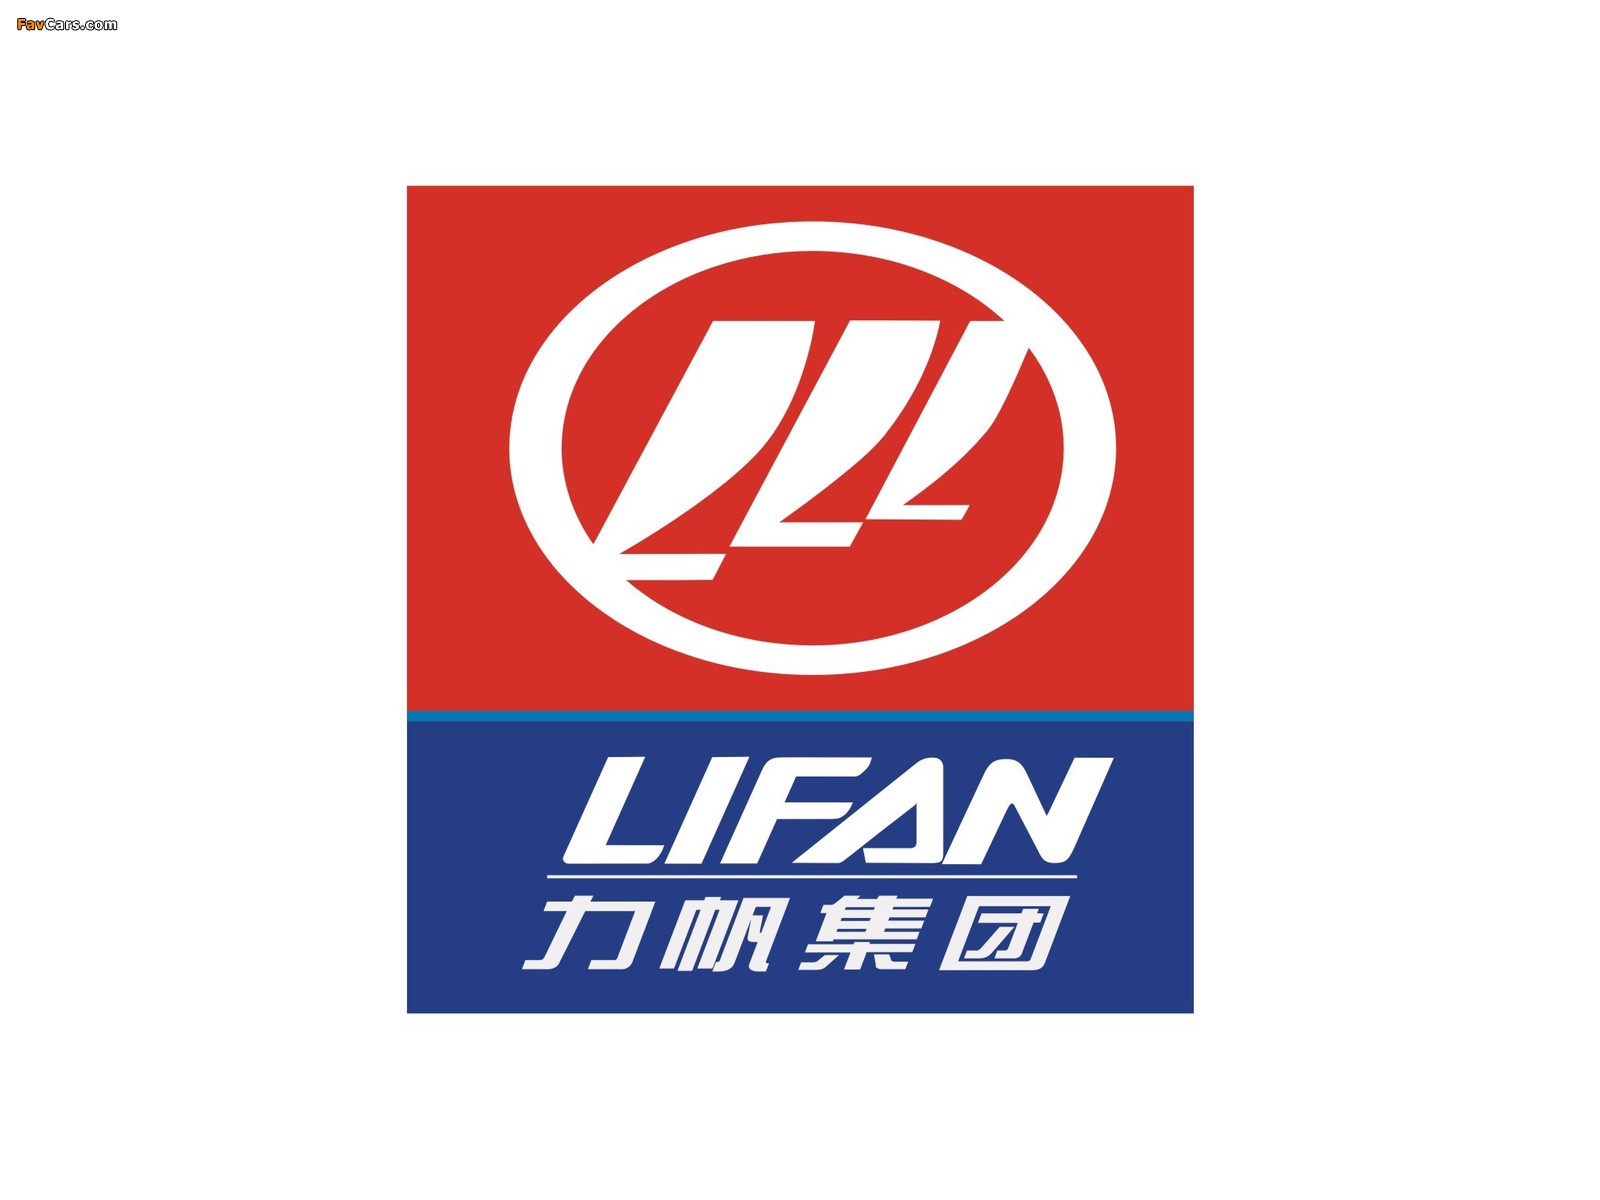 Lifan photos (1600 x 1200)